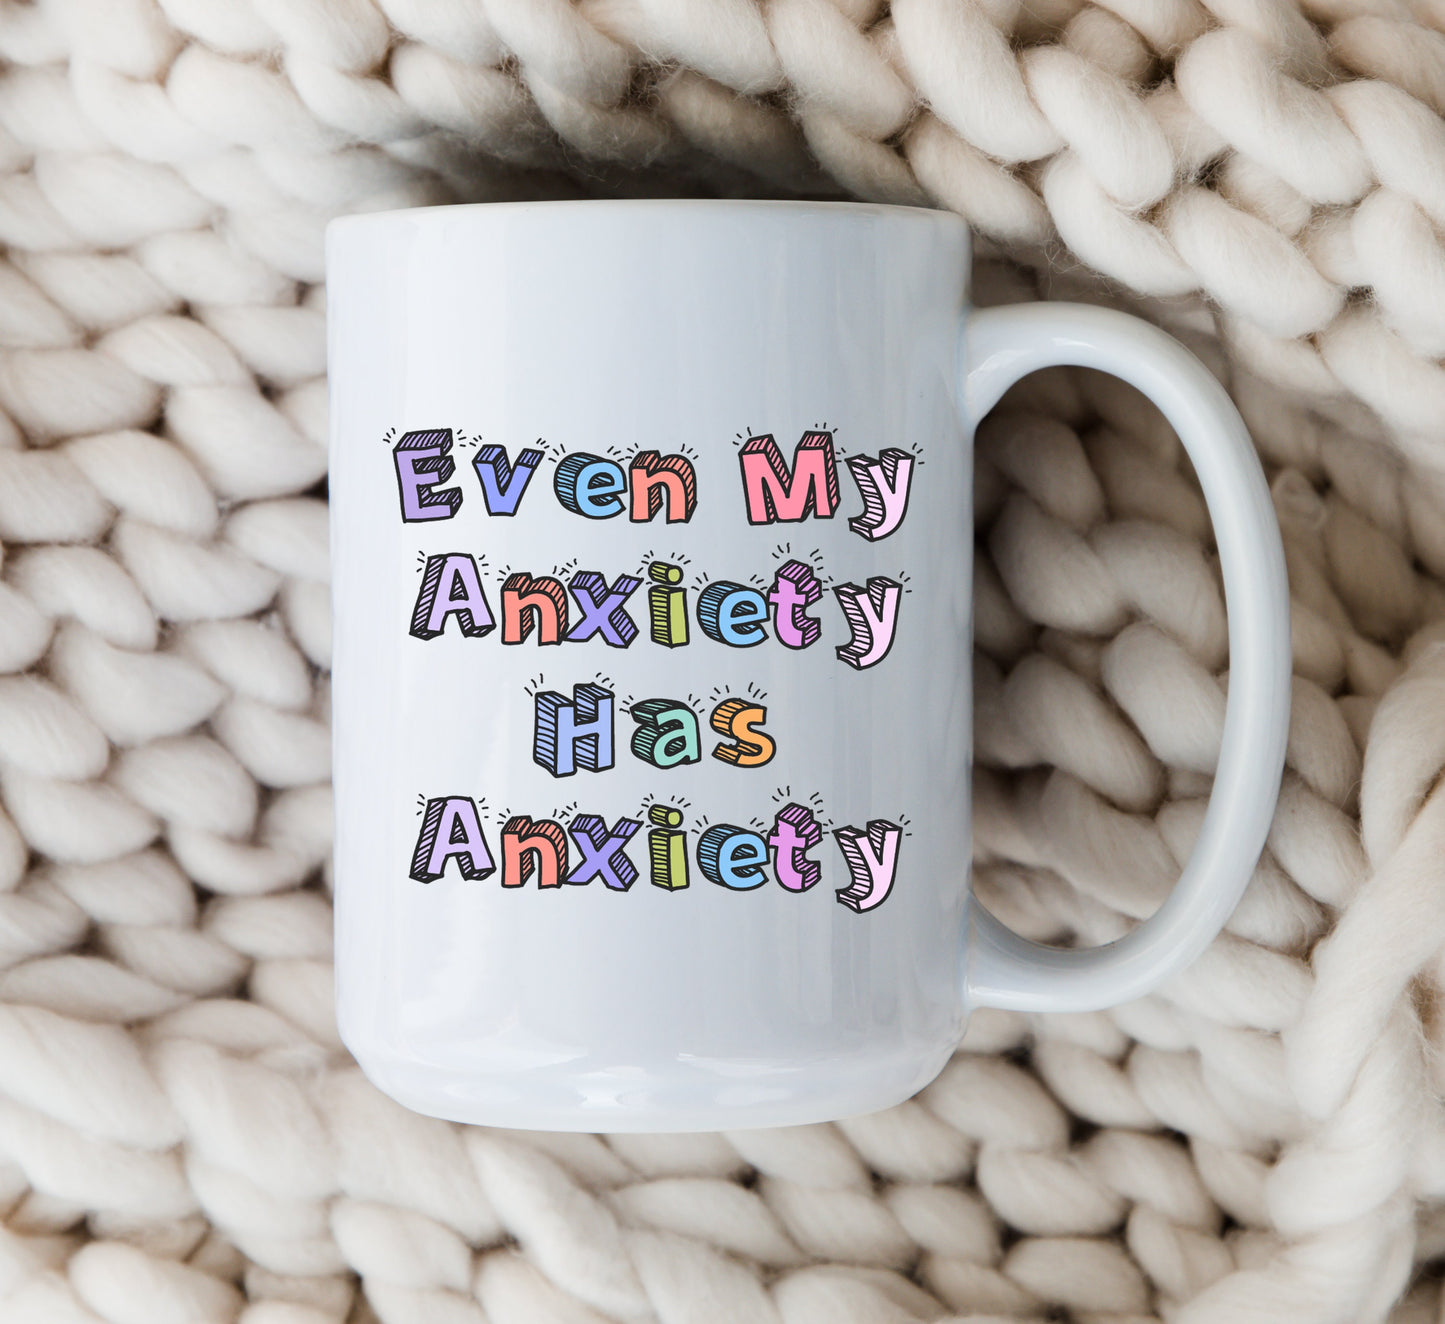 Even My Anxiety Has Anxiety Mug Mental Health Coffee Cup